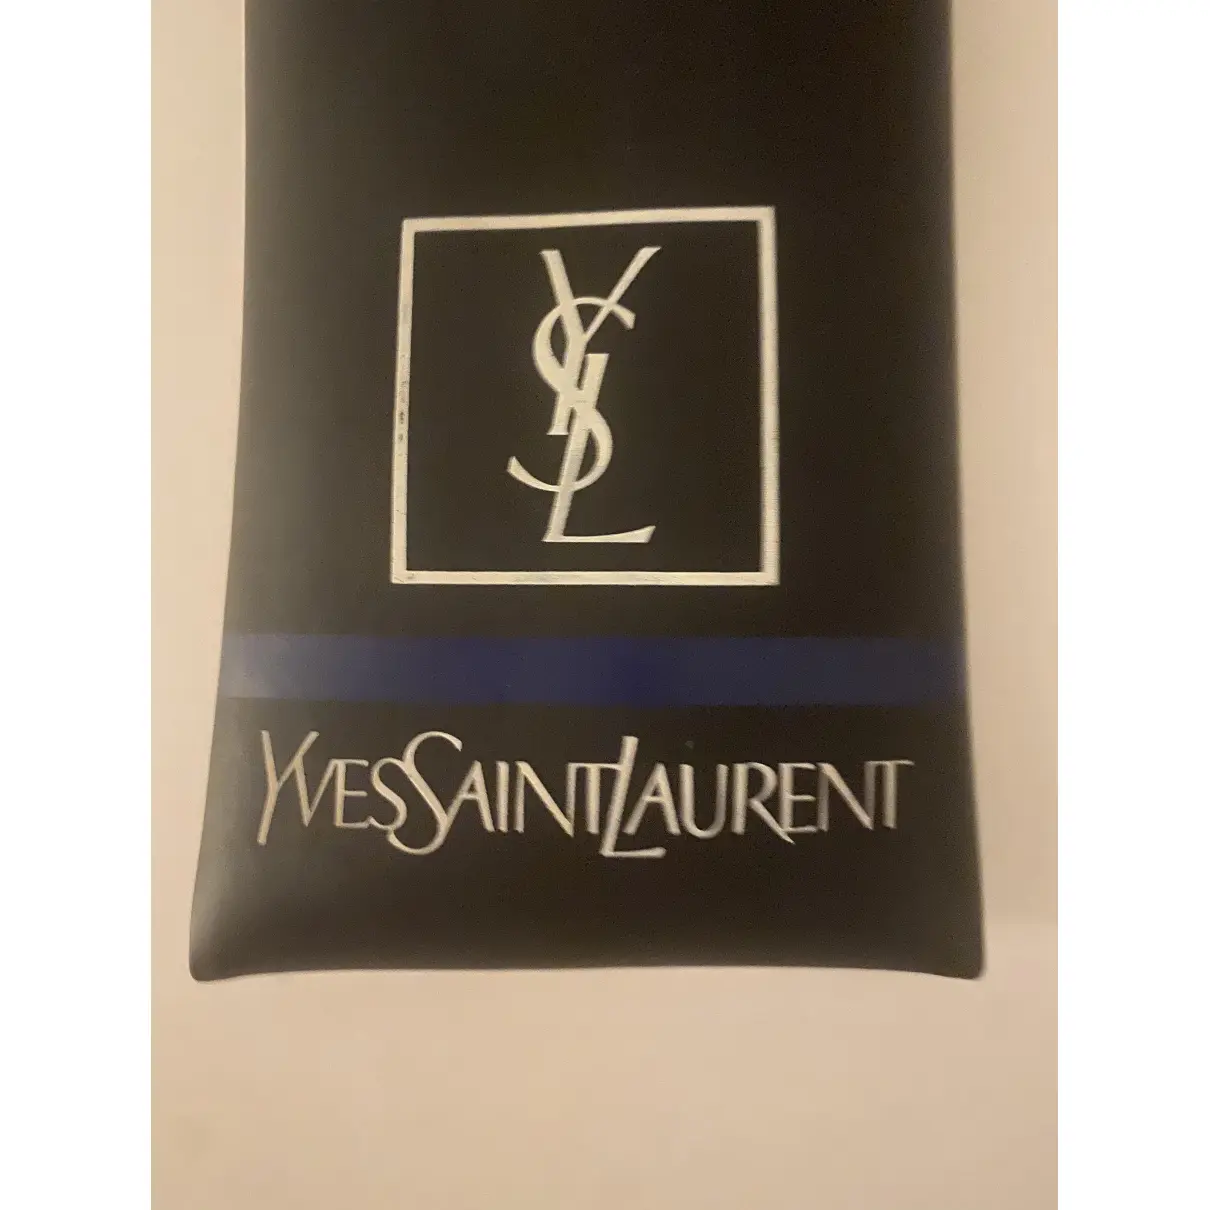 Buy Yves Saint Laurent Home decor online - Vintage